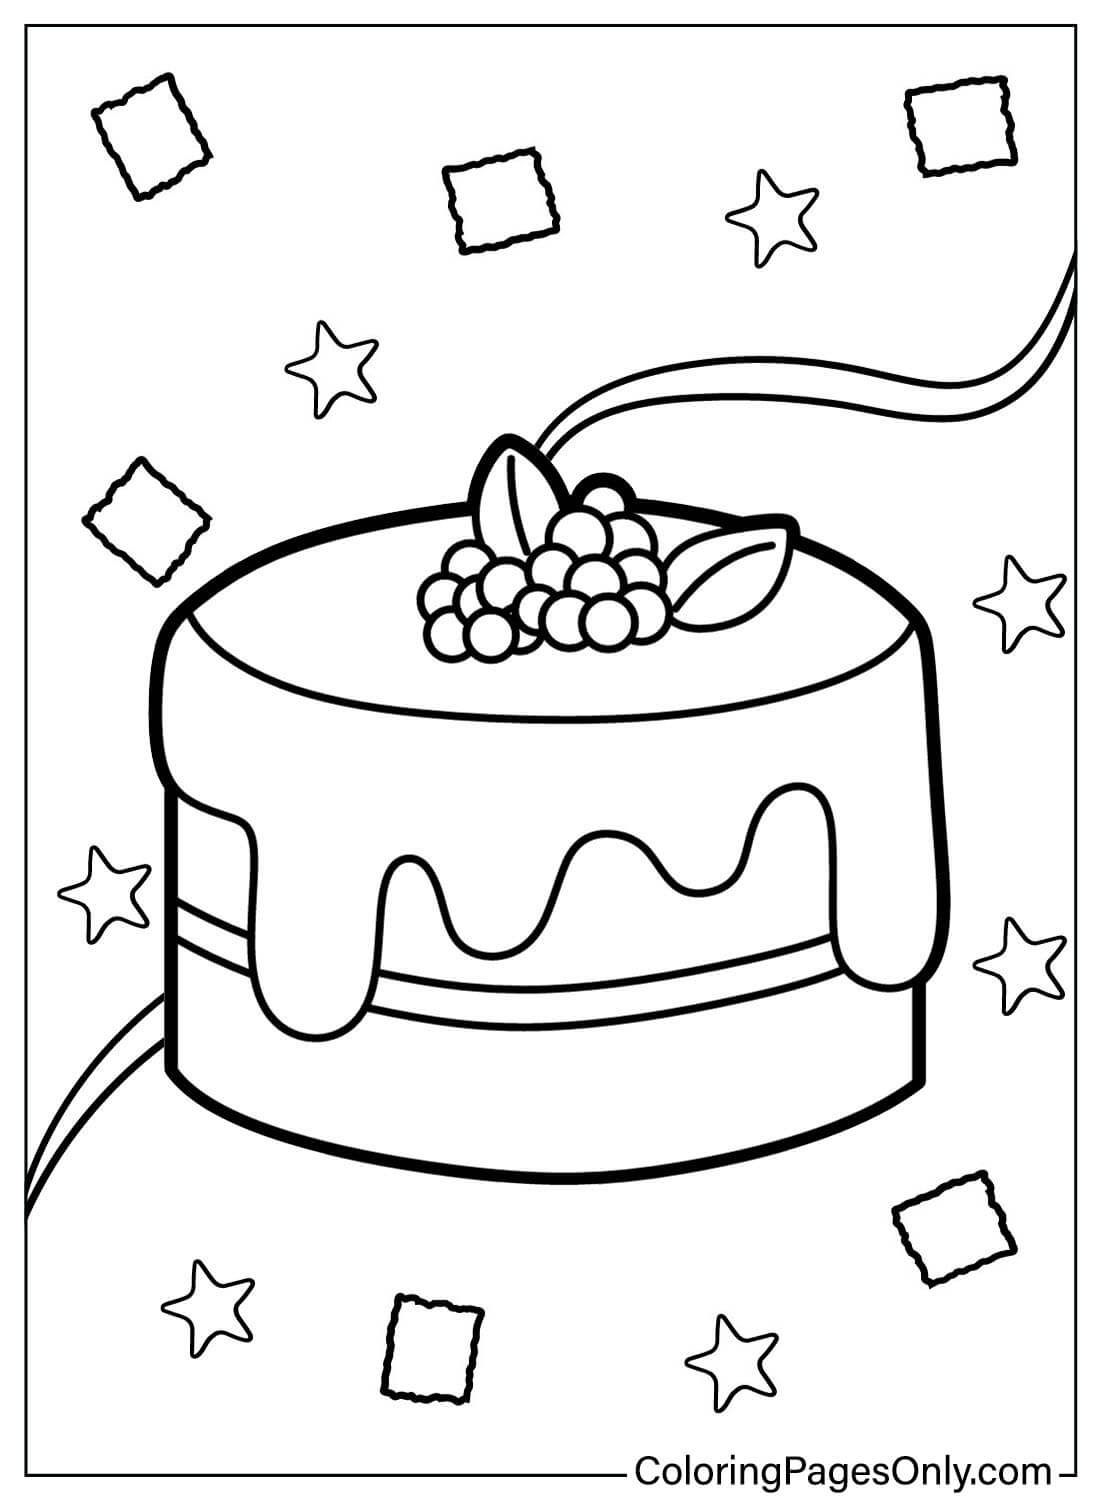 Printable Cake Coloring Page